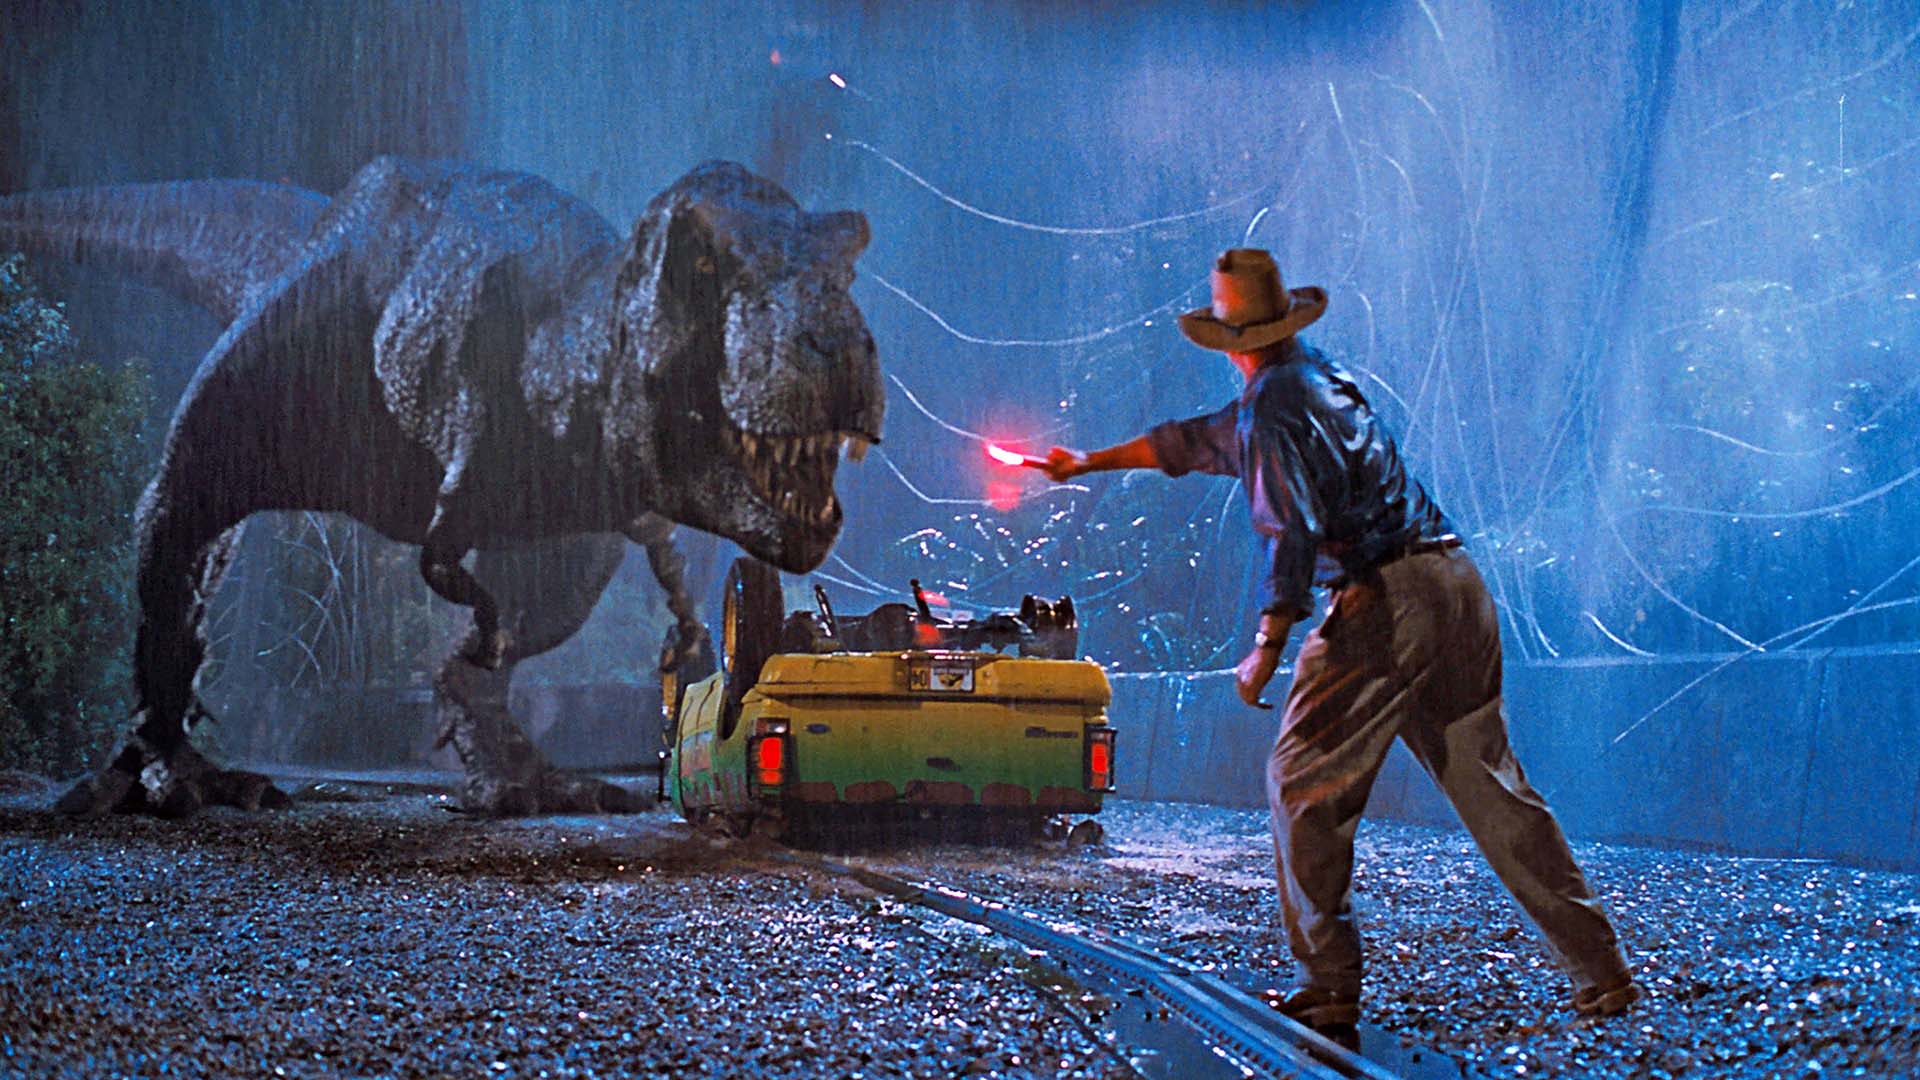 Jurassic Park Car Attack Scene